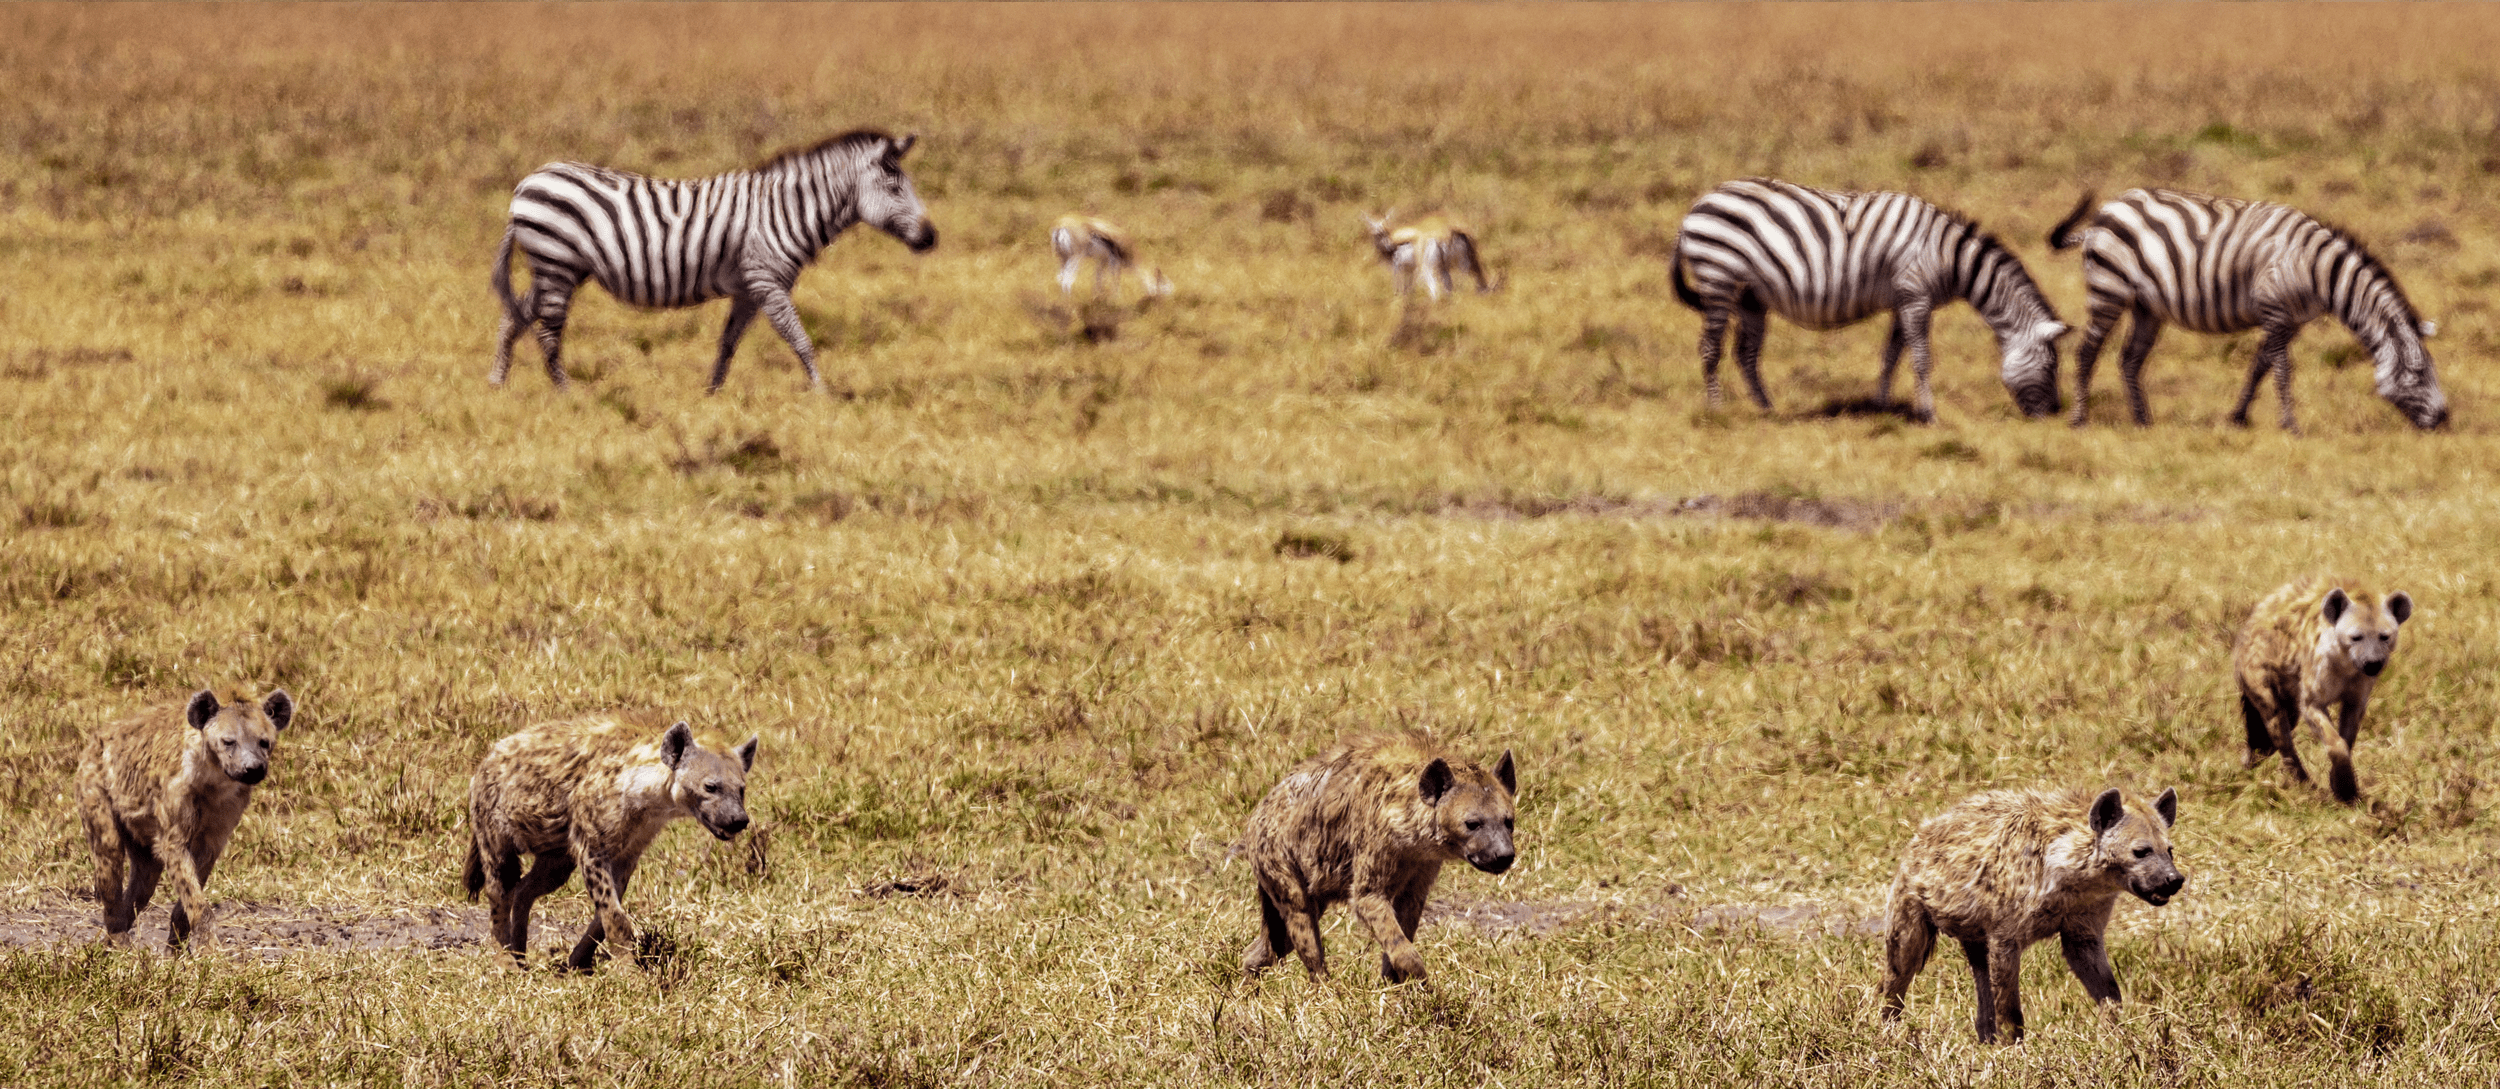 Hyenas, zebras and gazelle wandering landscape together peacefully